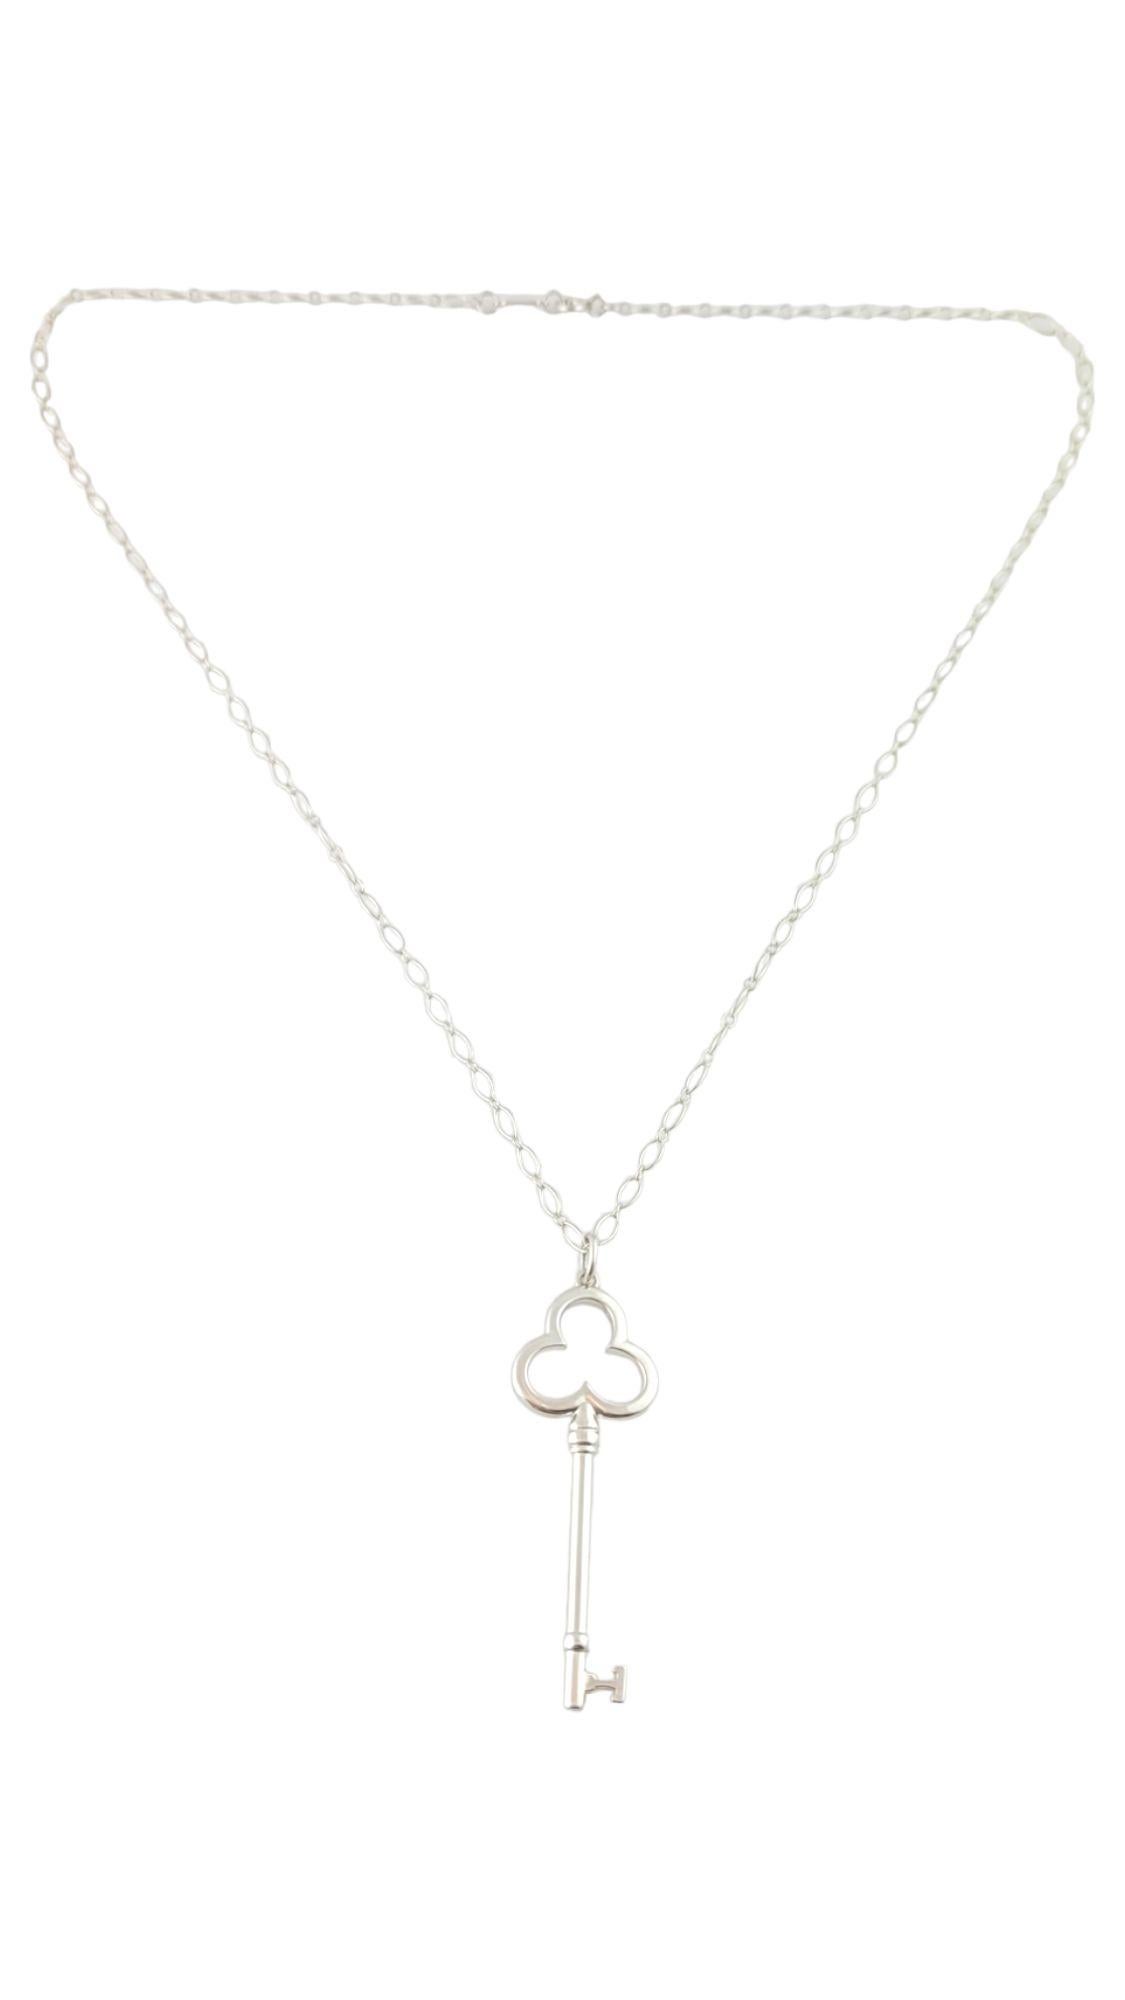 Tiffany & Co. Sterling Silver Clover Trefoil Key Pendant Necklace

Gorgeous sterling silver key pendant on a beautiful matching sterling silver chain by designer Tiffany & Co.

Chain length: 20 1/4